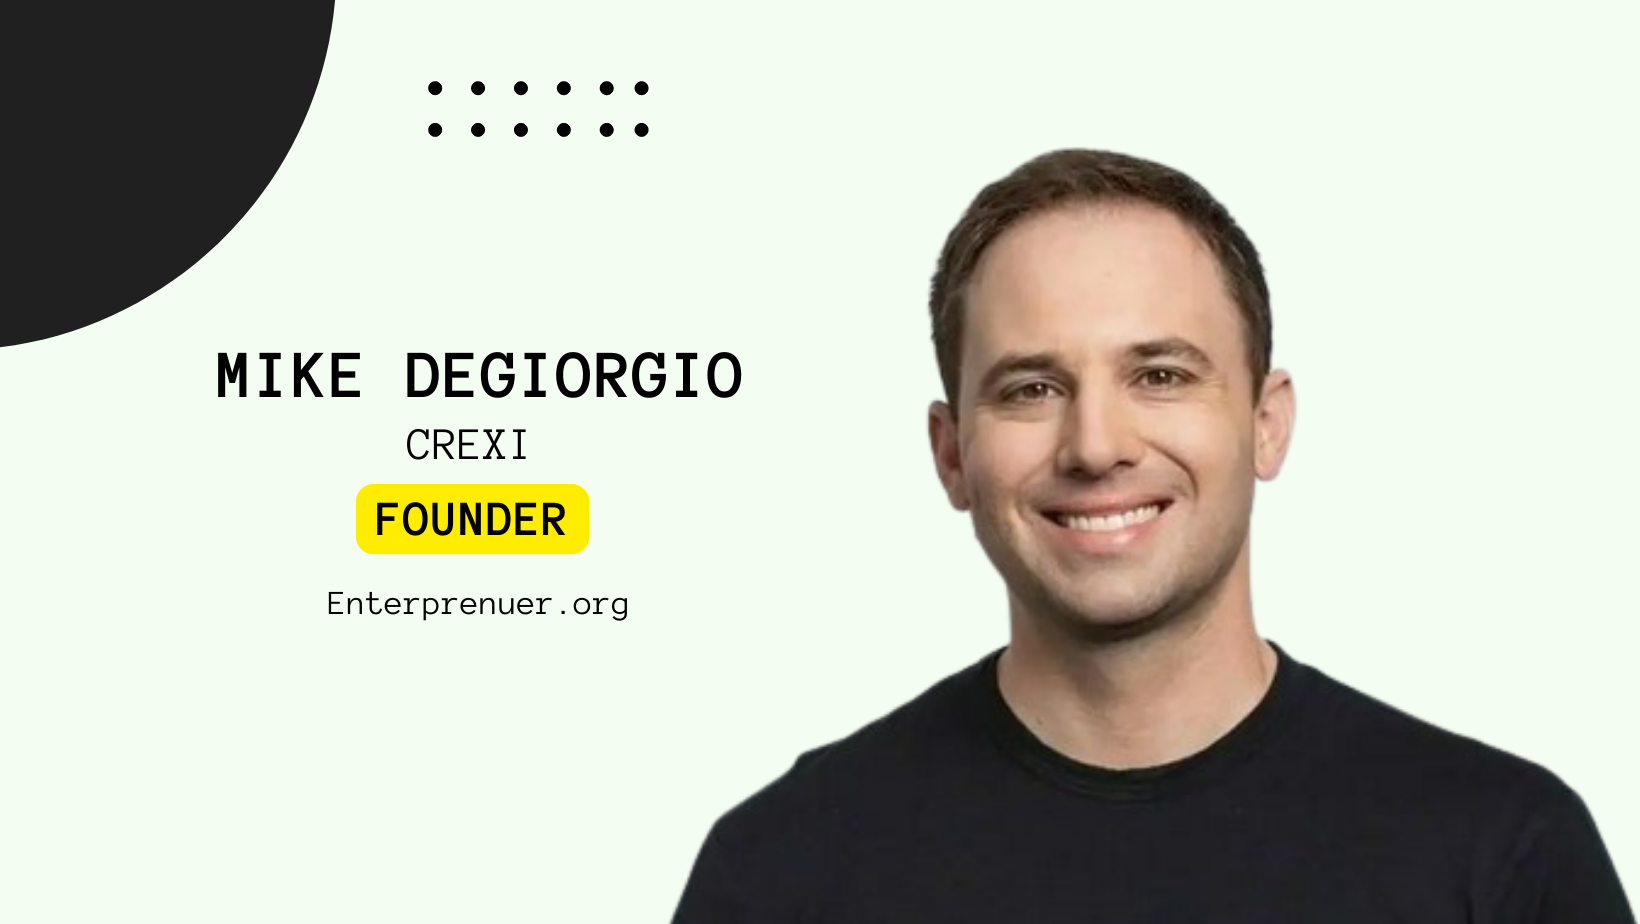 Meet Mike DeGiorgio Founder of Crexi